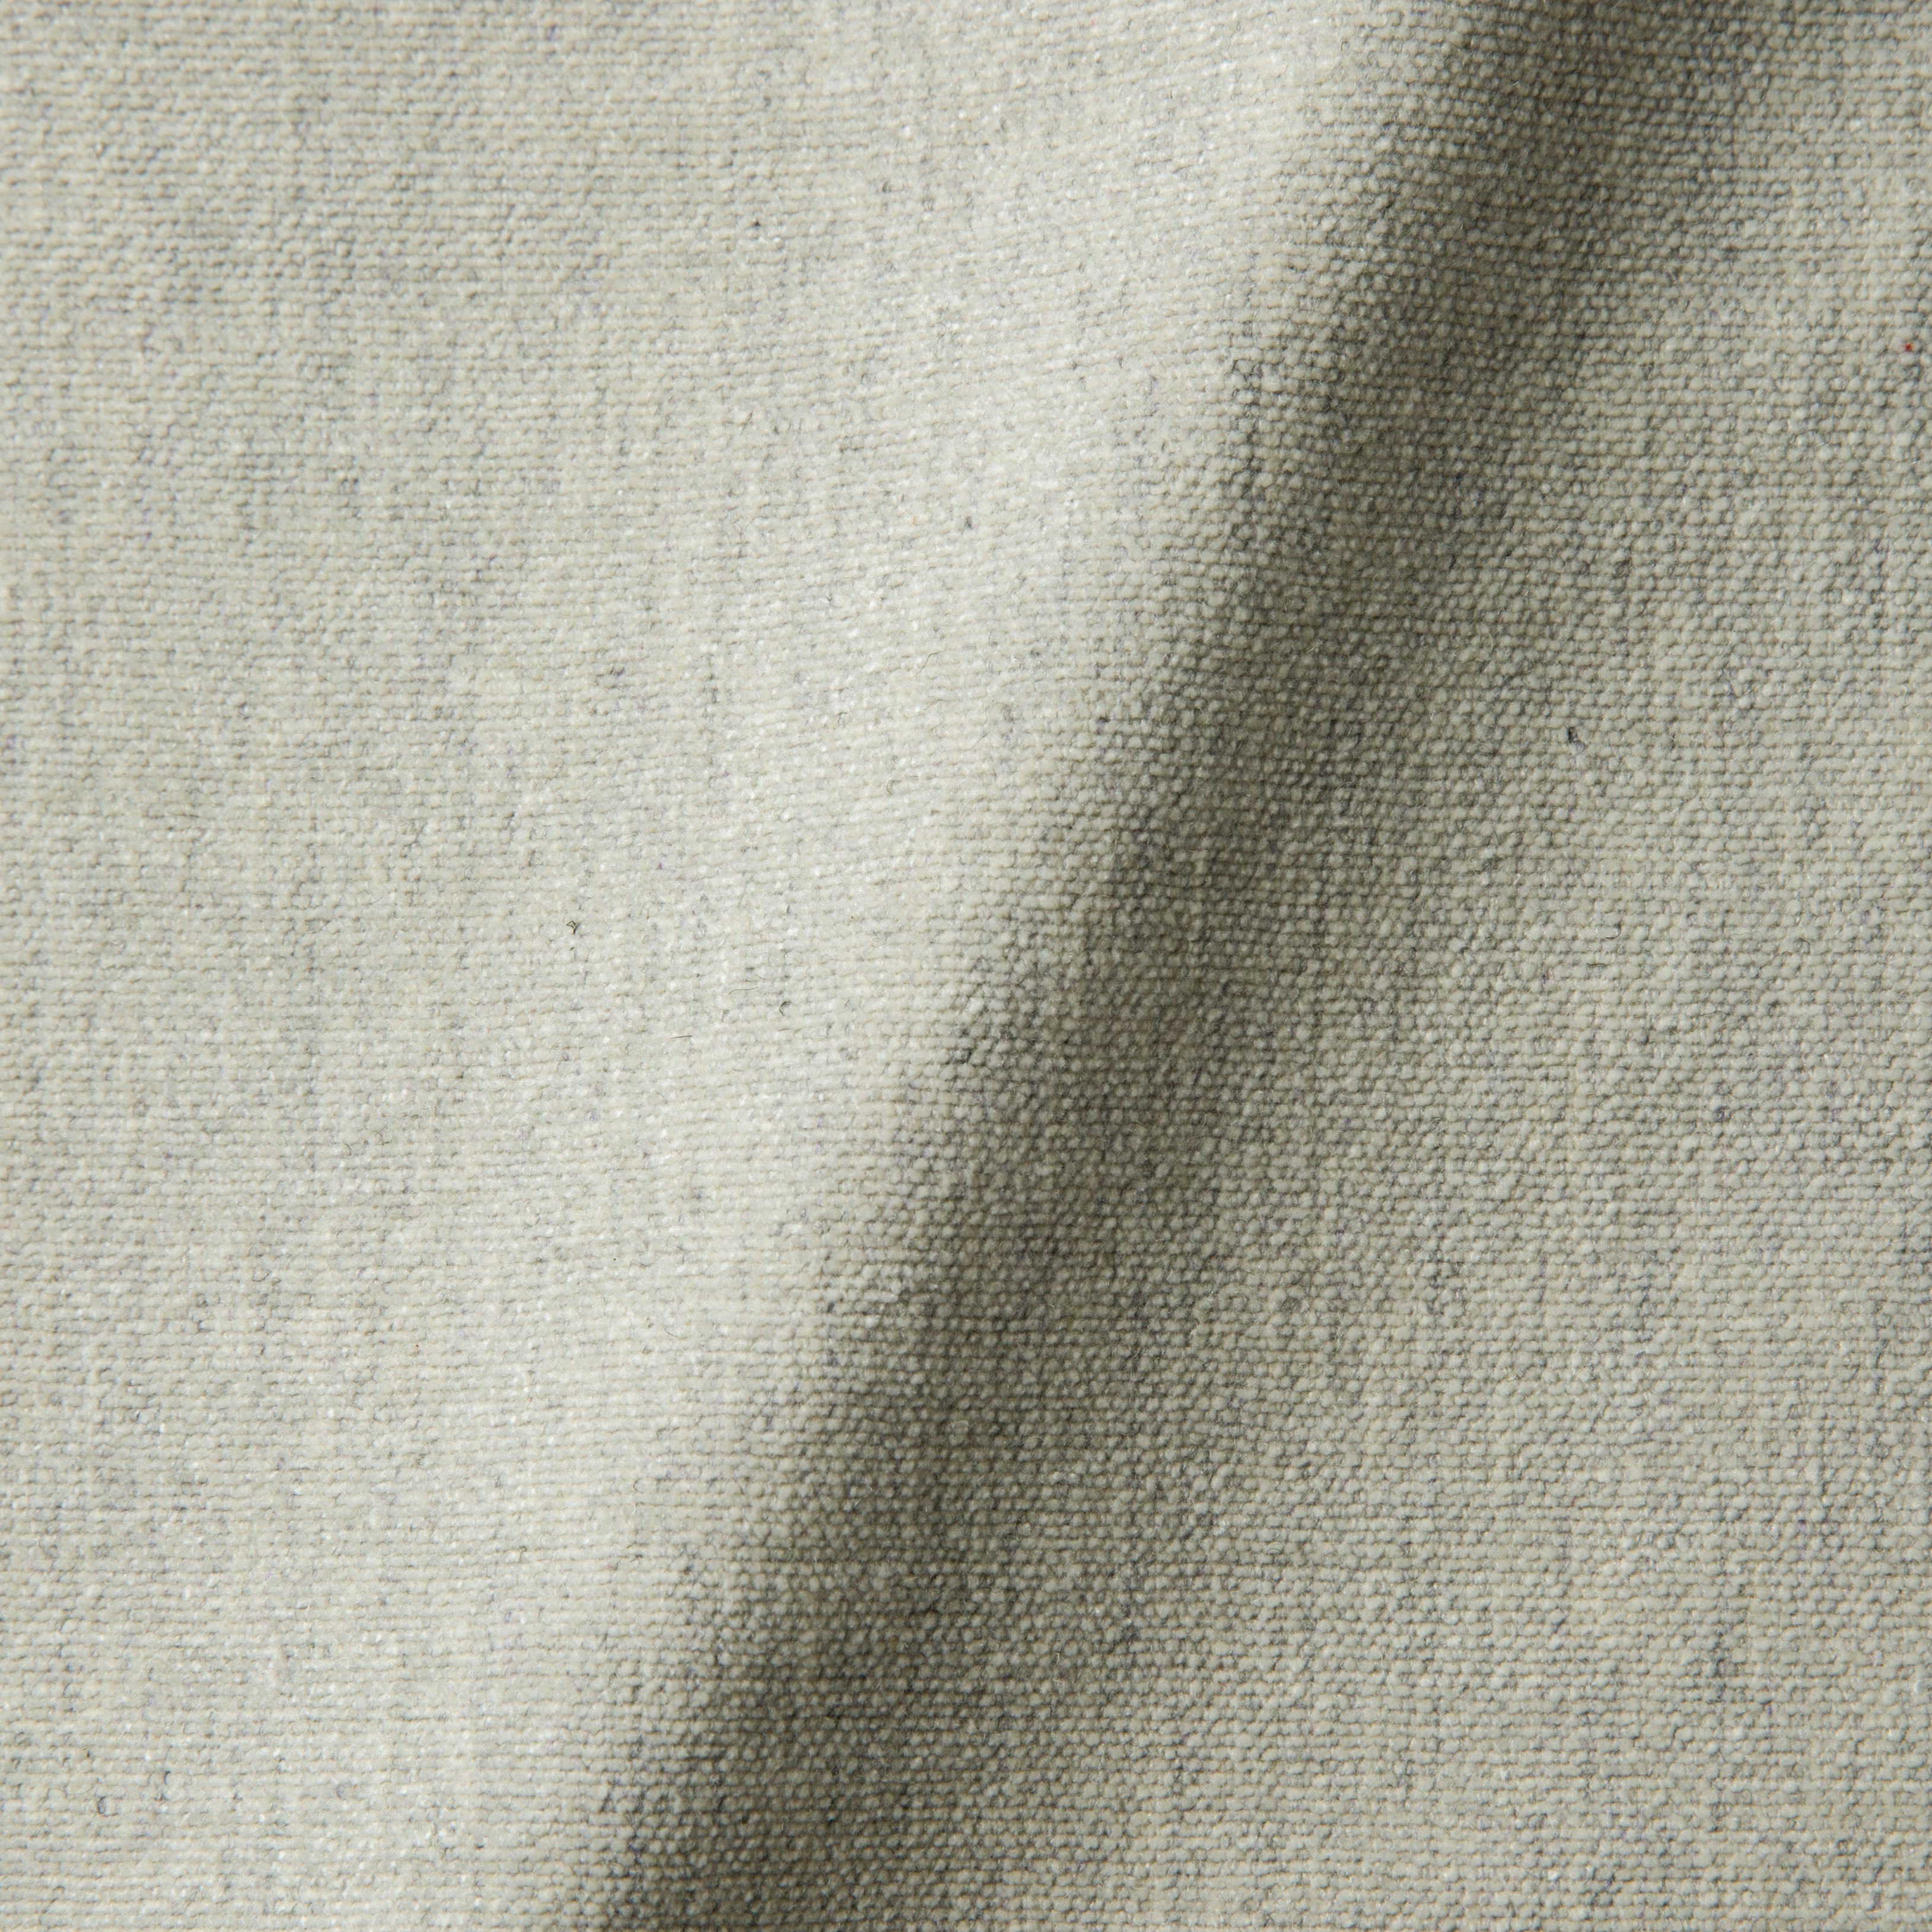 Fabric sample Liscio Latte grey